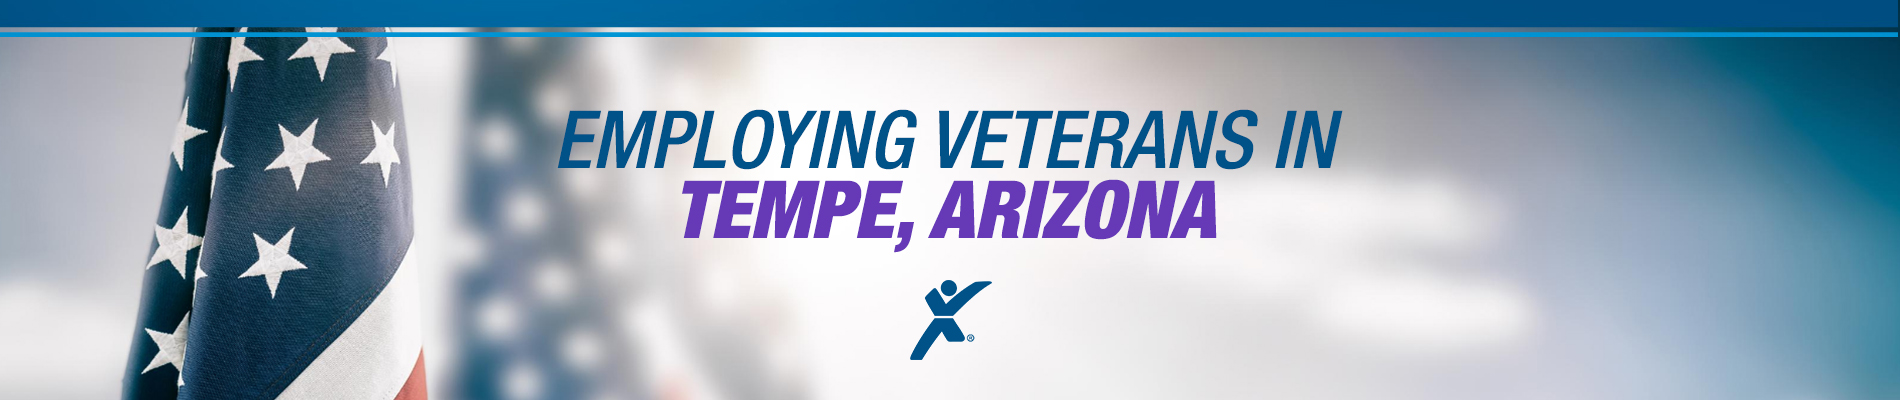 Express Careers for Veterans in Tempe, Arizona - (480) 413-1200